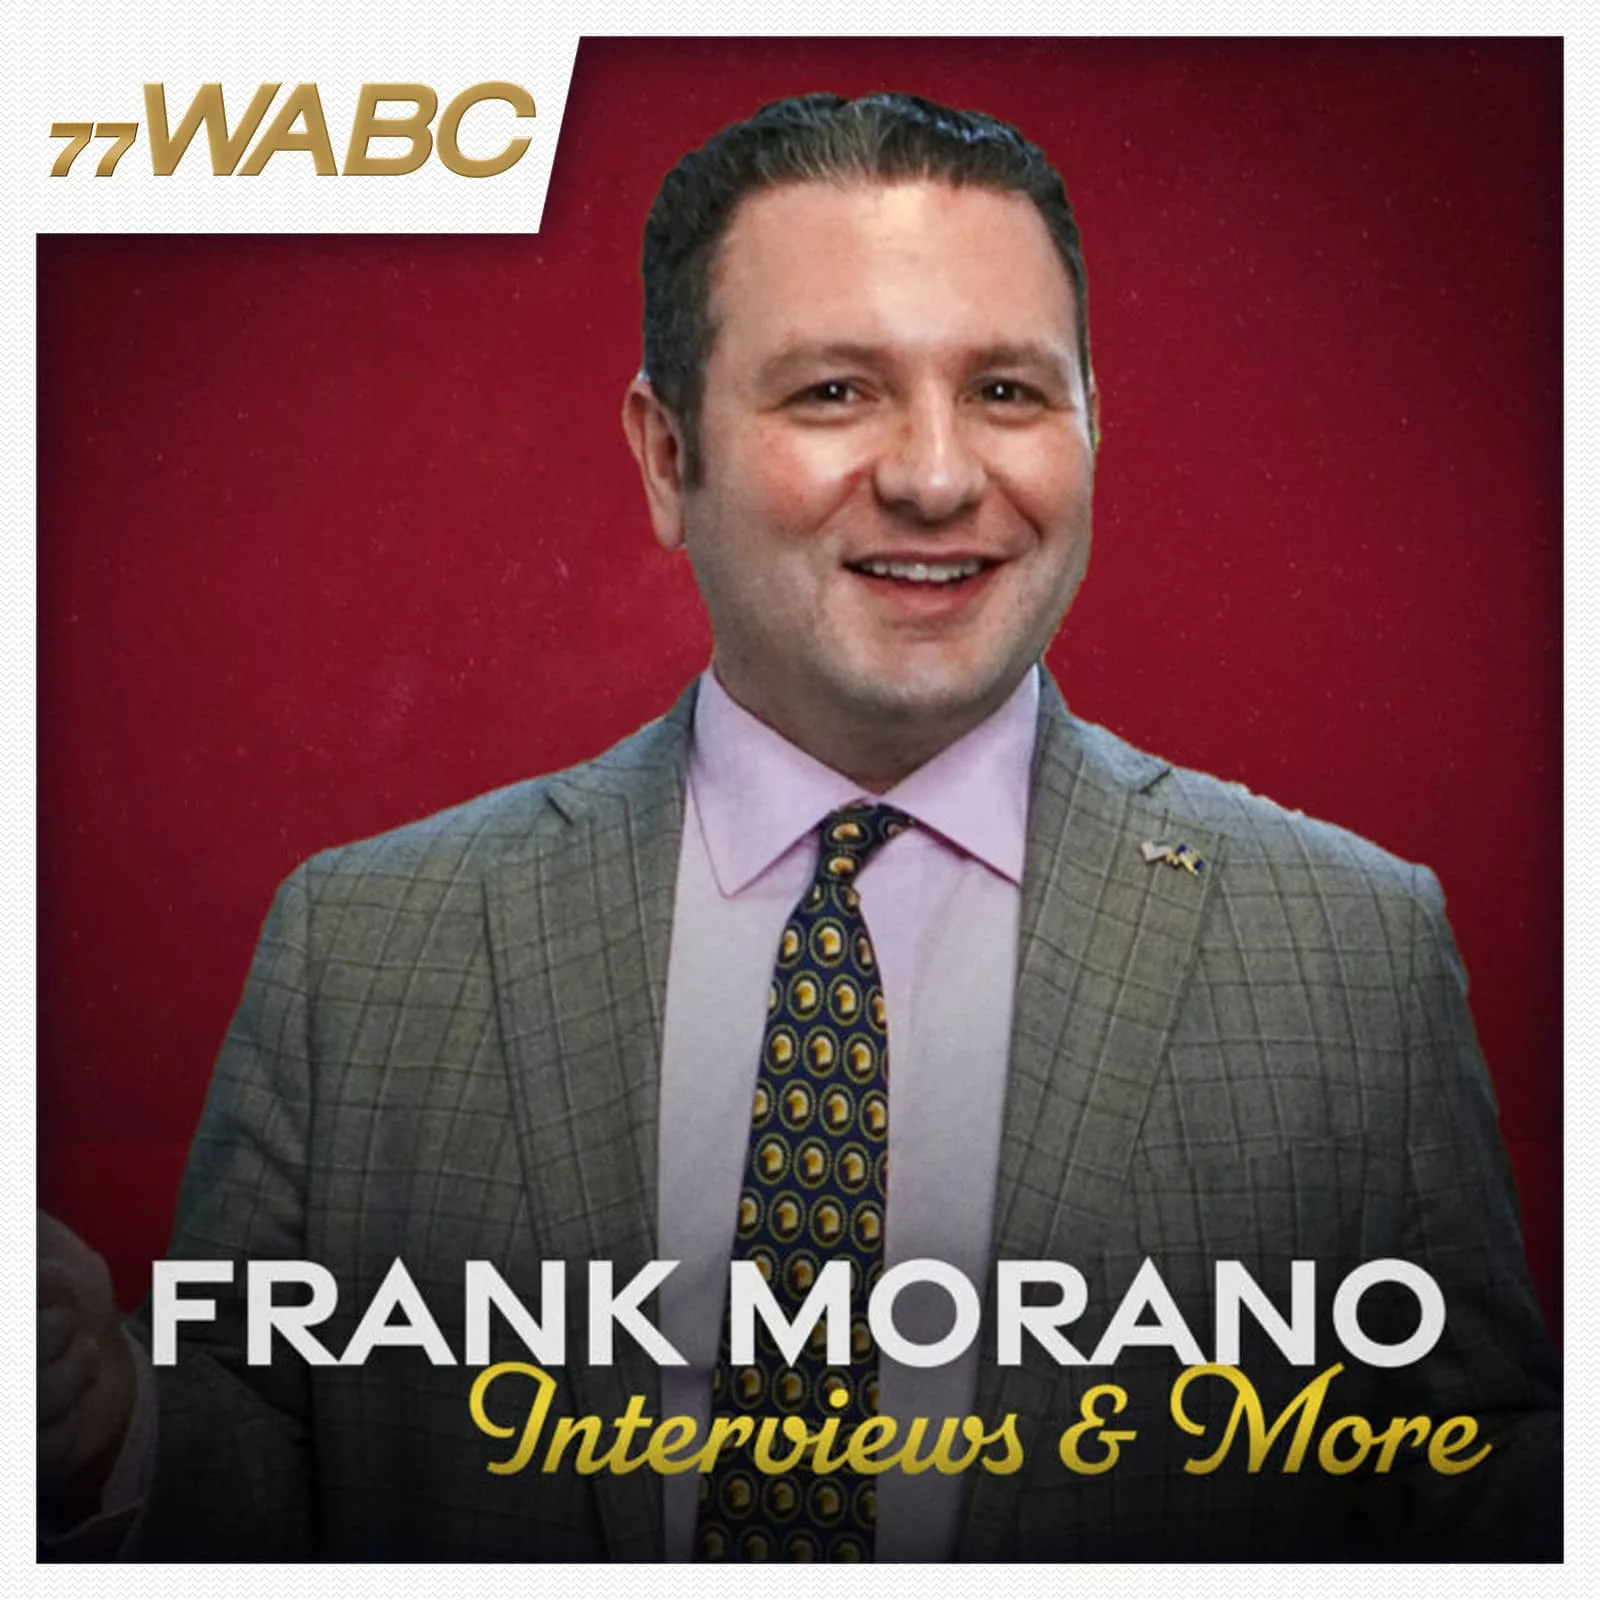 frank-morano-interviews-and-more-podcast-new-logo843244